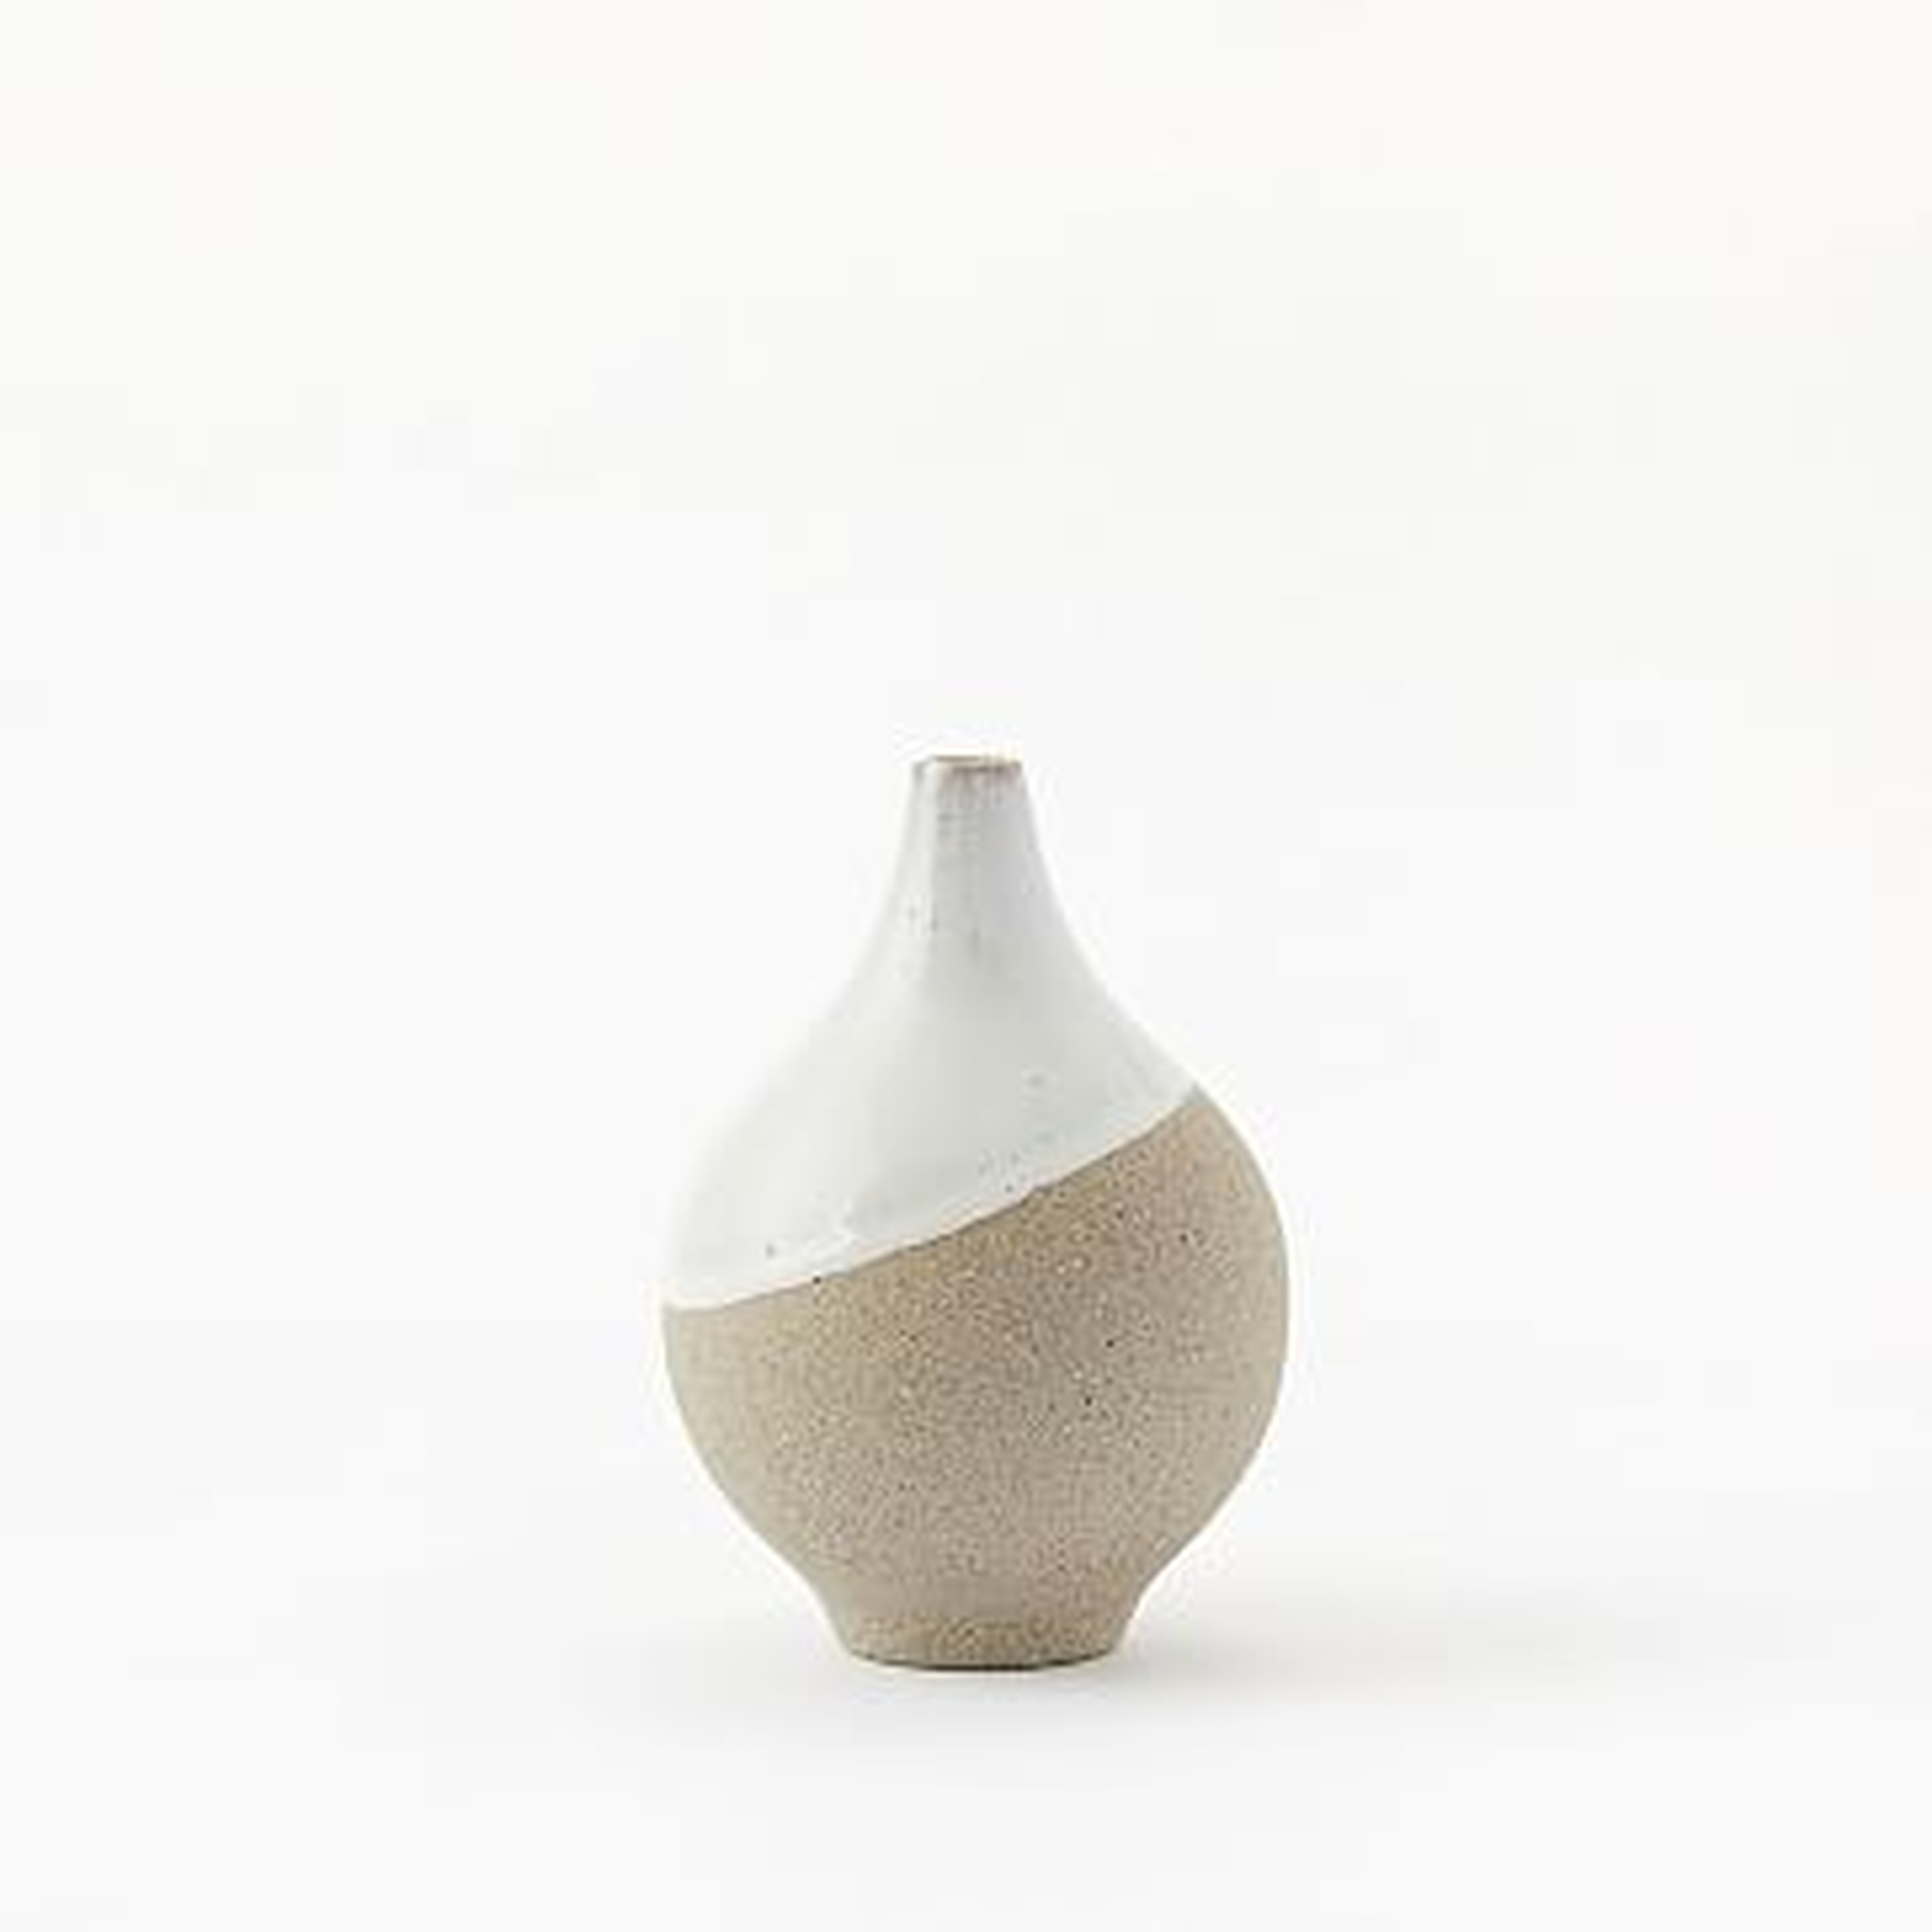 Half-Dipped Stoneware Vase, Gray/White, Small Bulb, 6" - West Elm